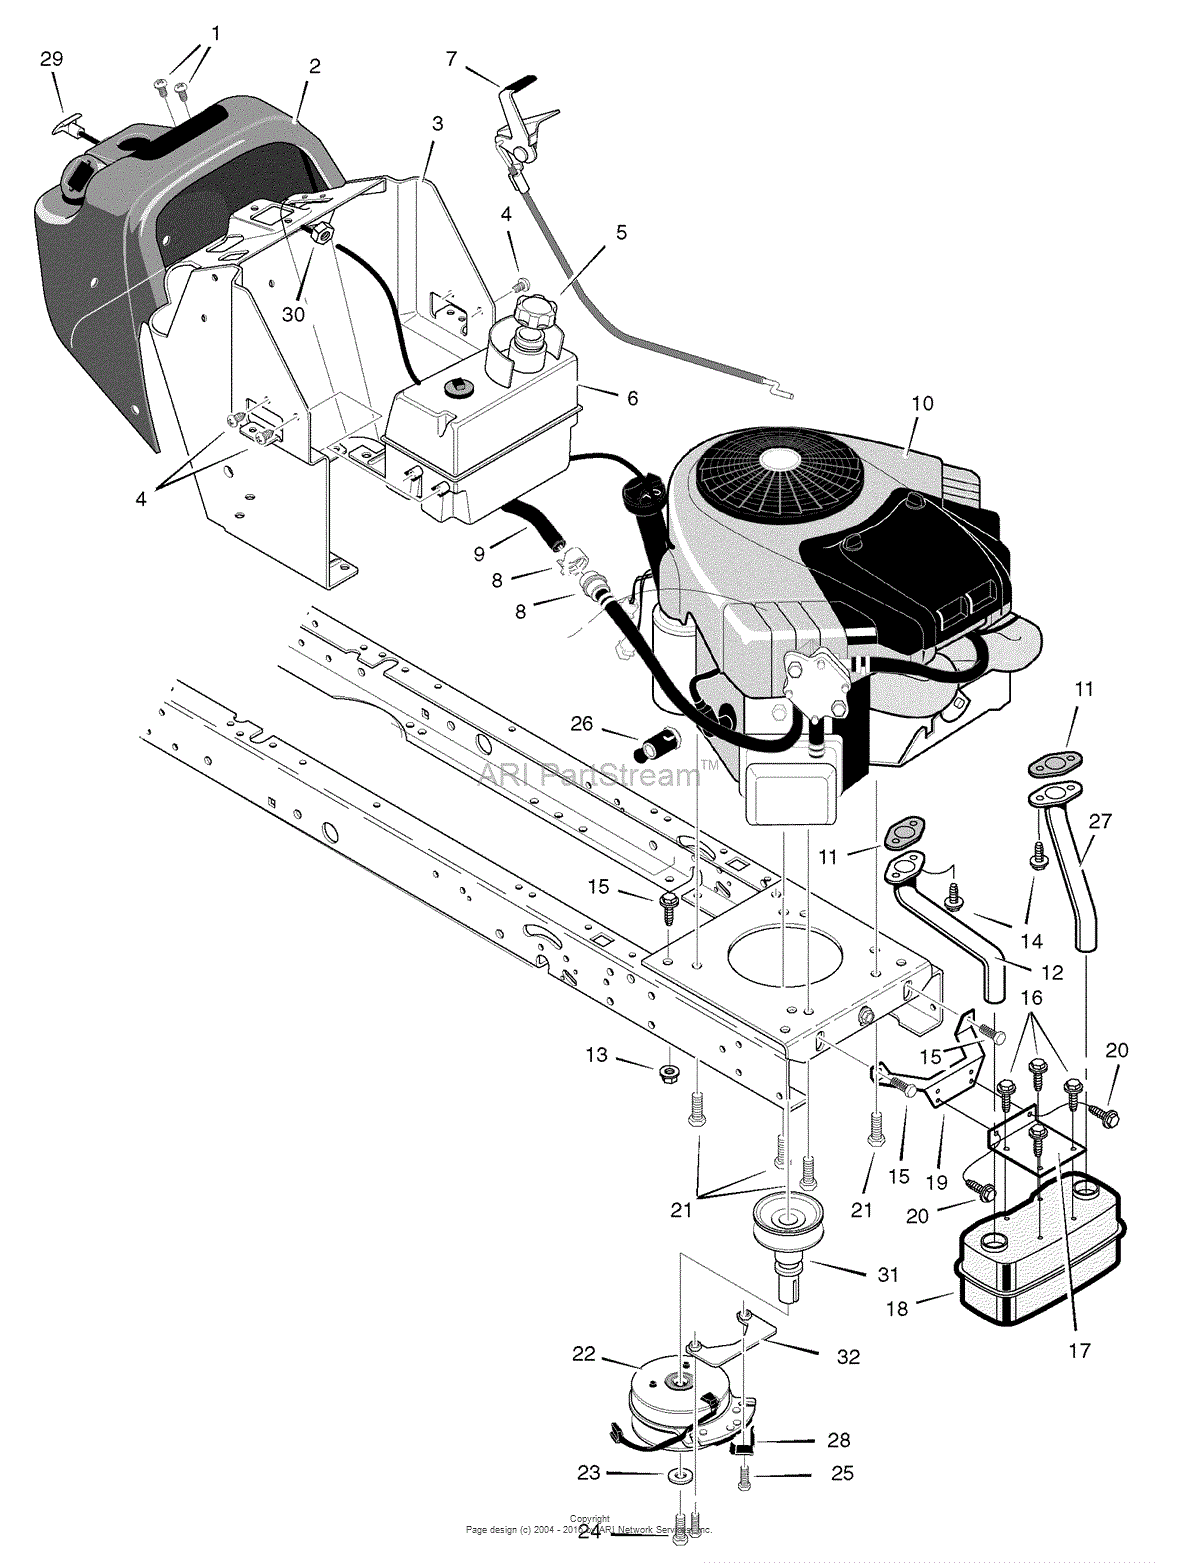 Riding Lawn Mower Engine Diagram